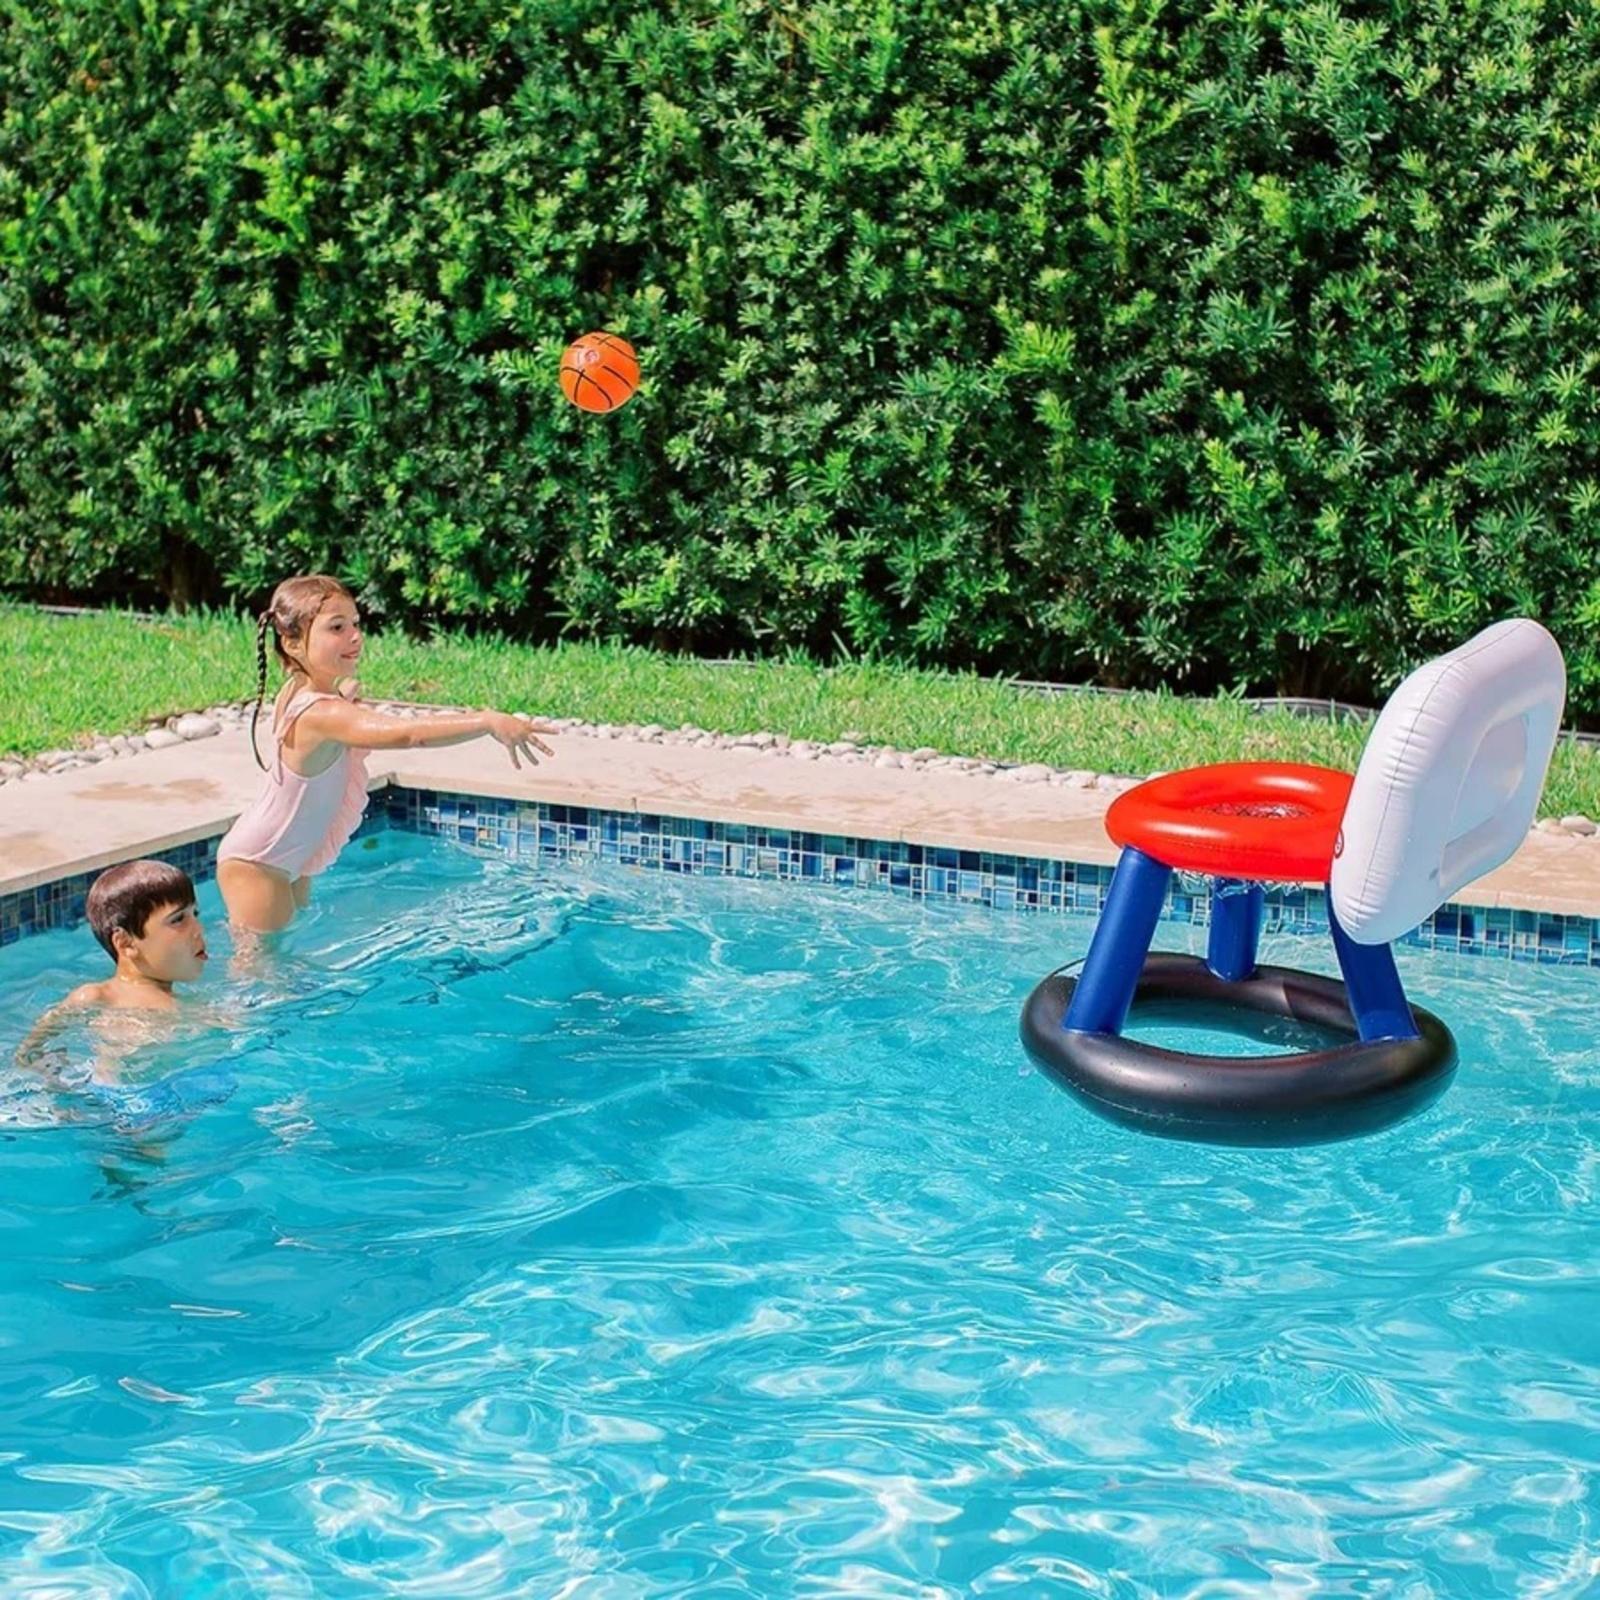 Little Tikes Basketball Training Set For Kids. Giant Splash N Fun Inflatable Floating Basketball.